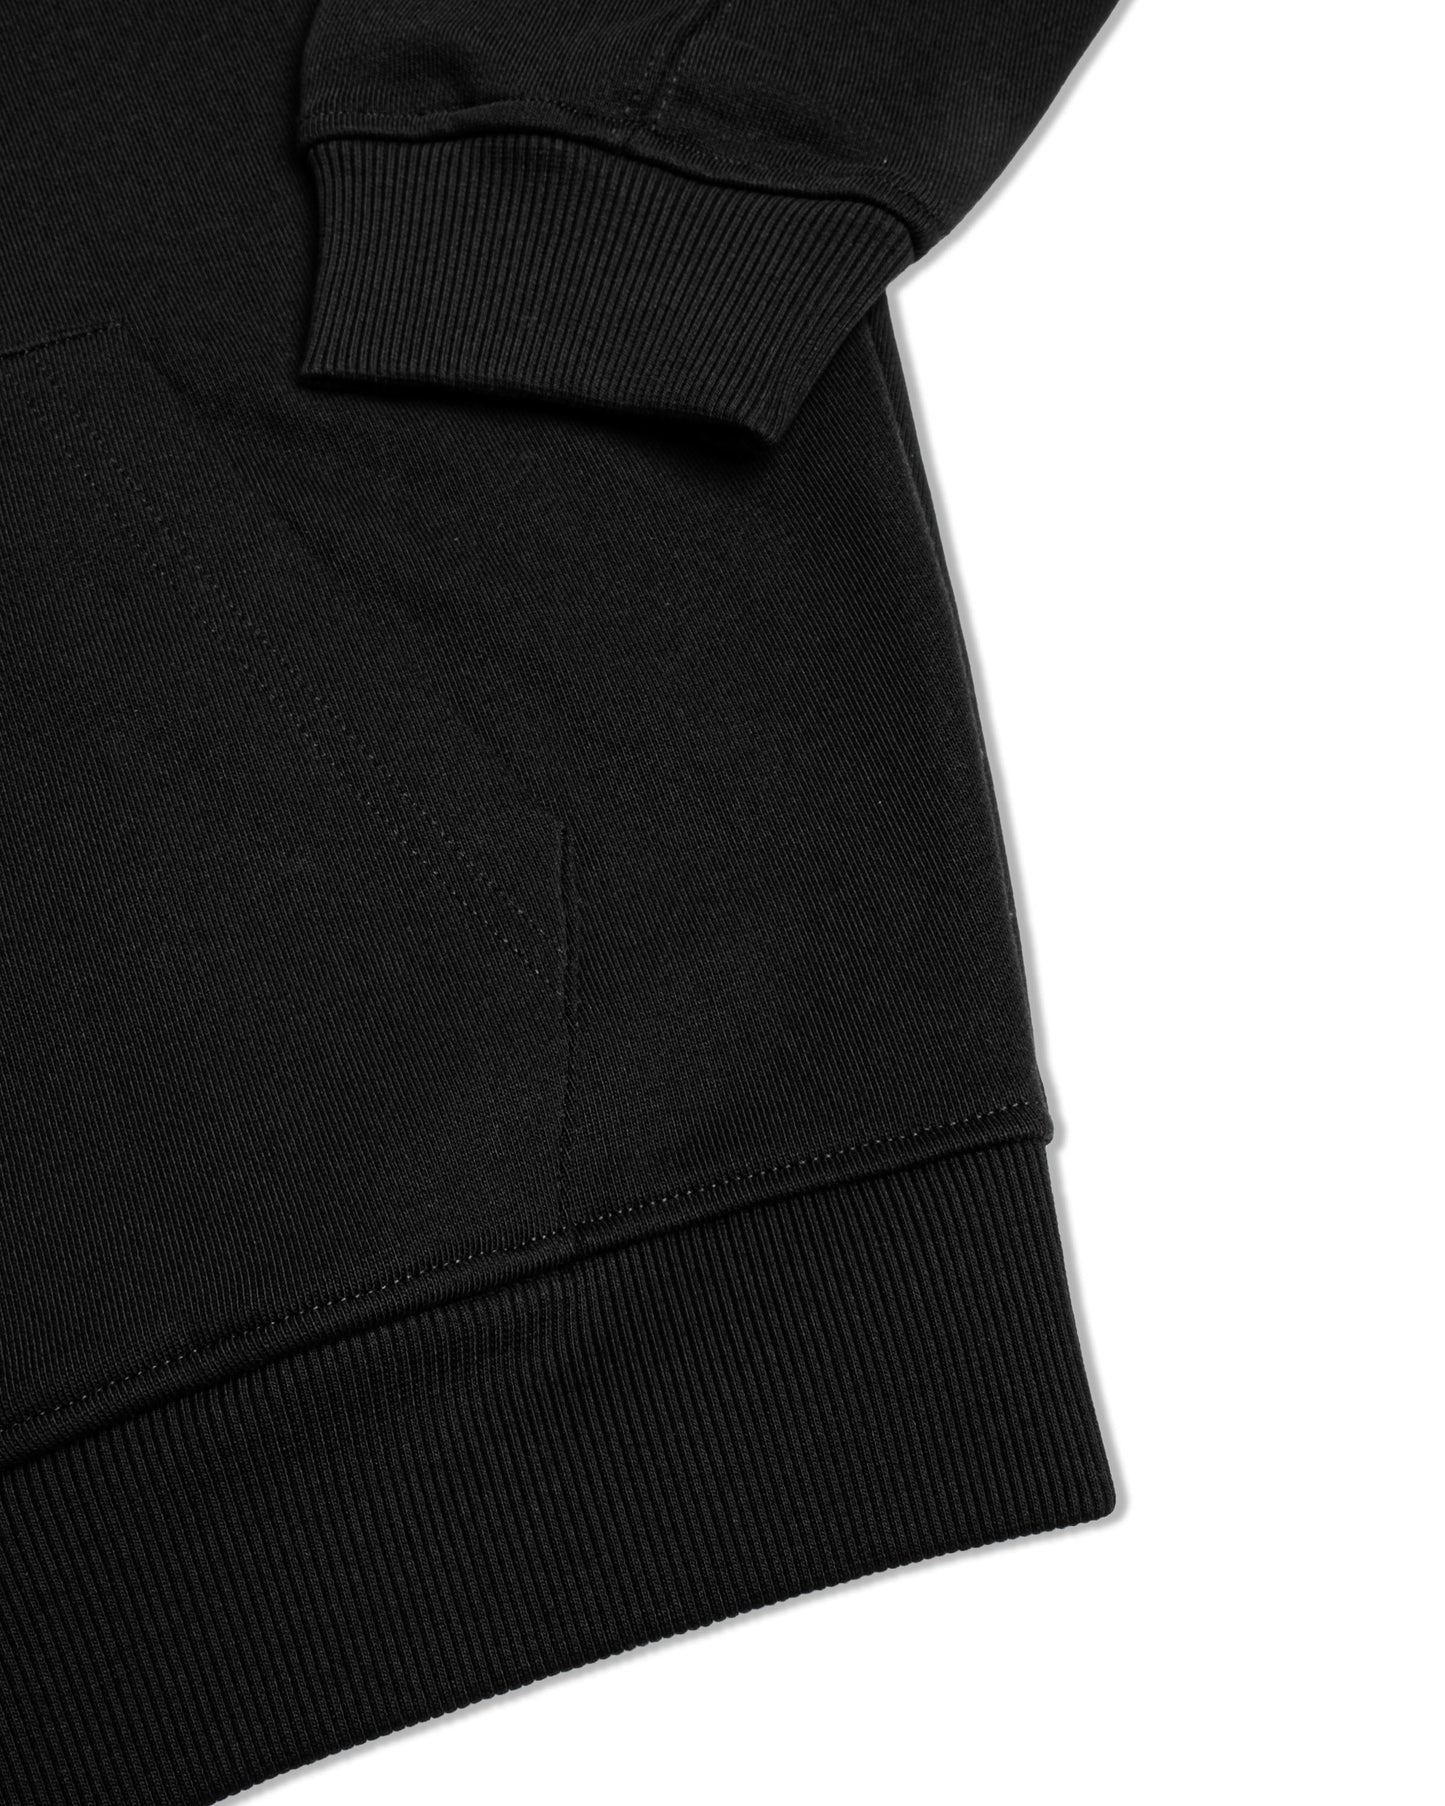 Levents® Classic Zipper Hoodie/ Black